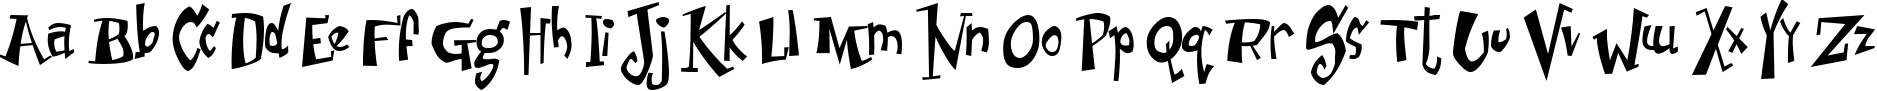 Пример написания английского алфавита шрифтом Junior & Stinky